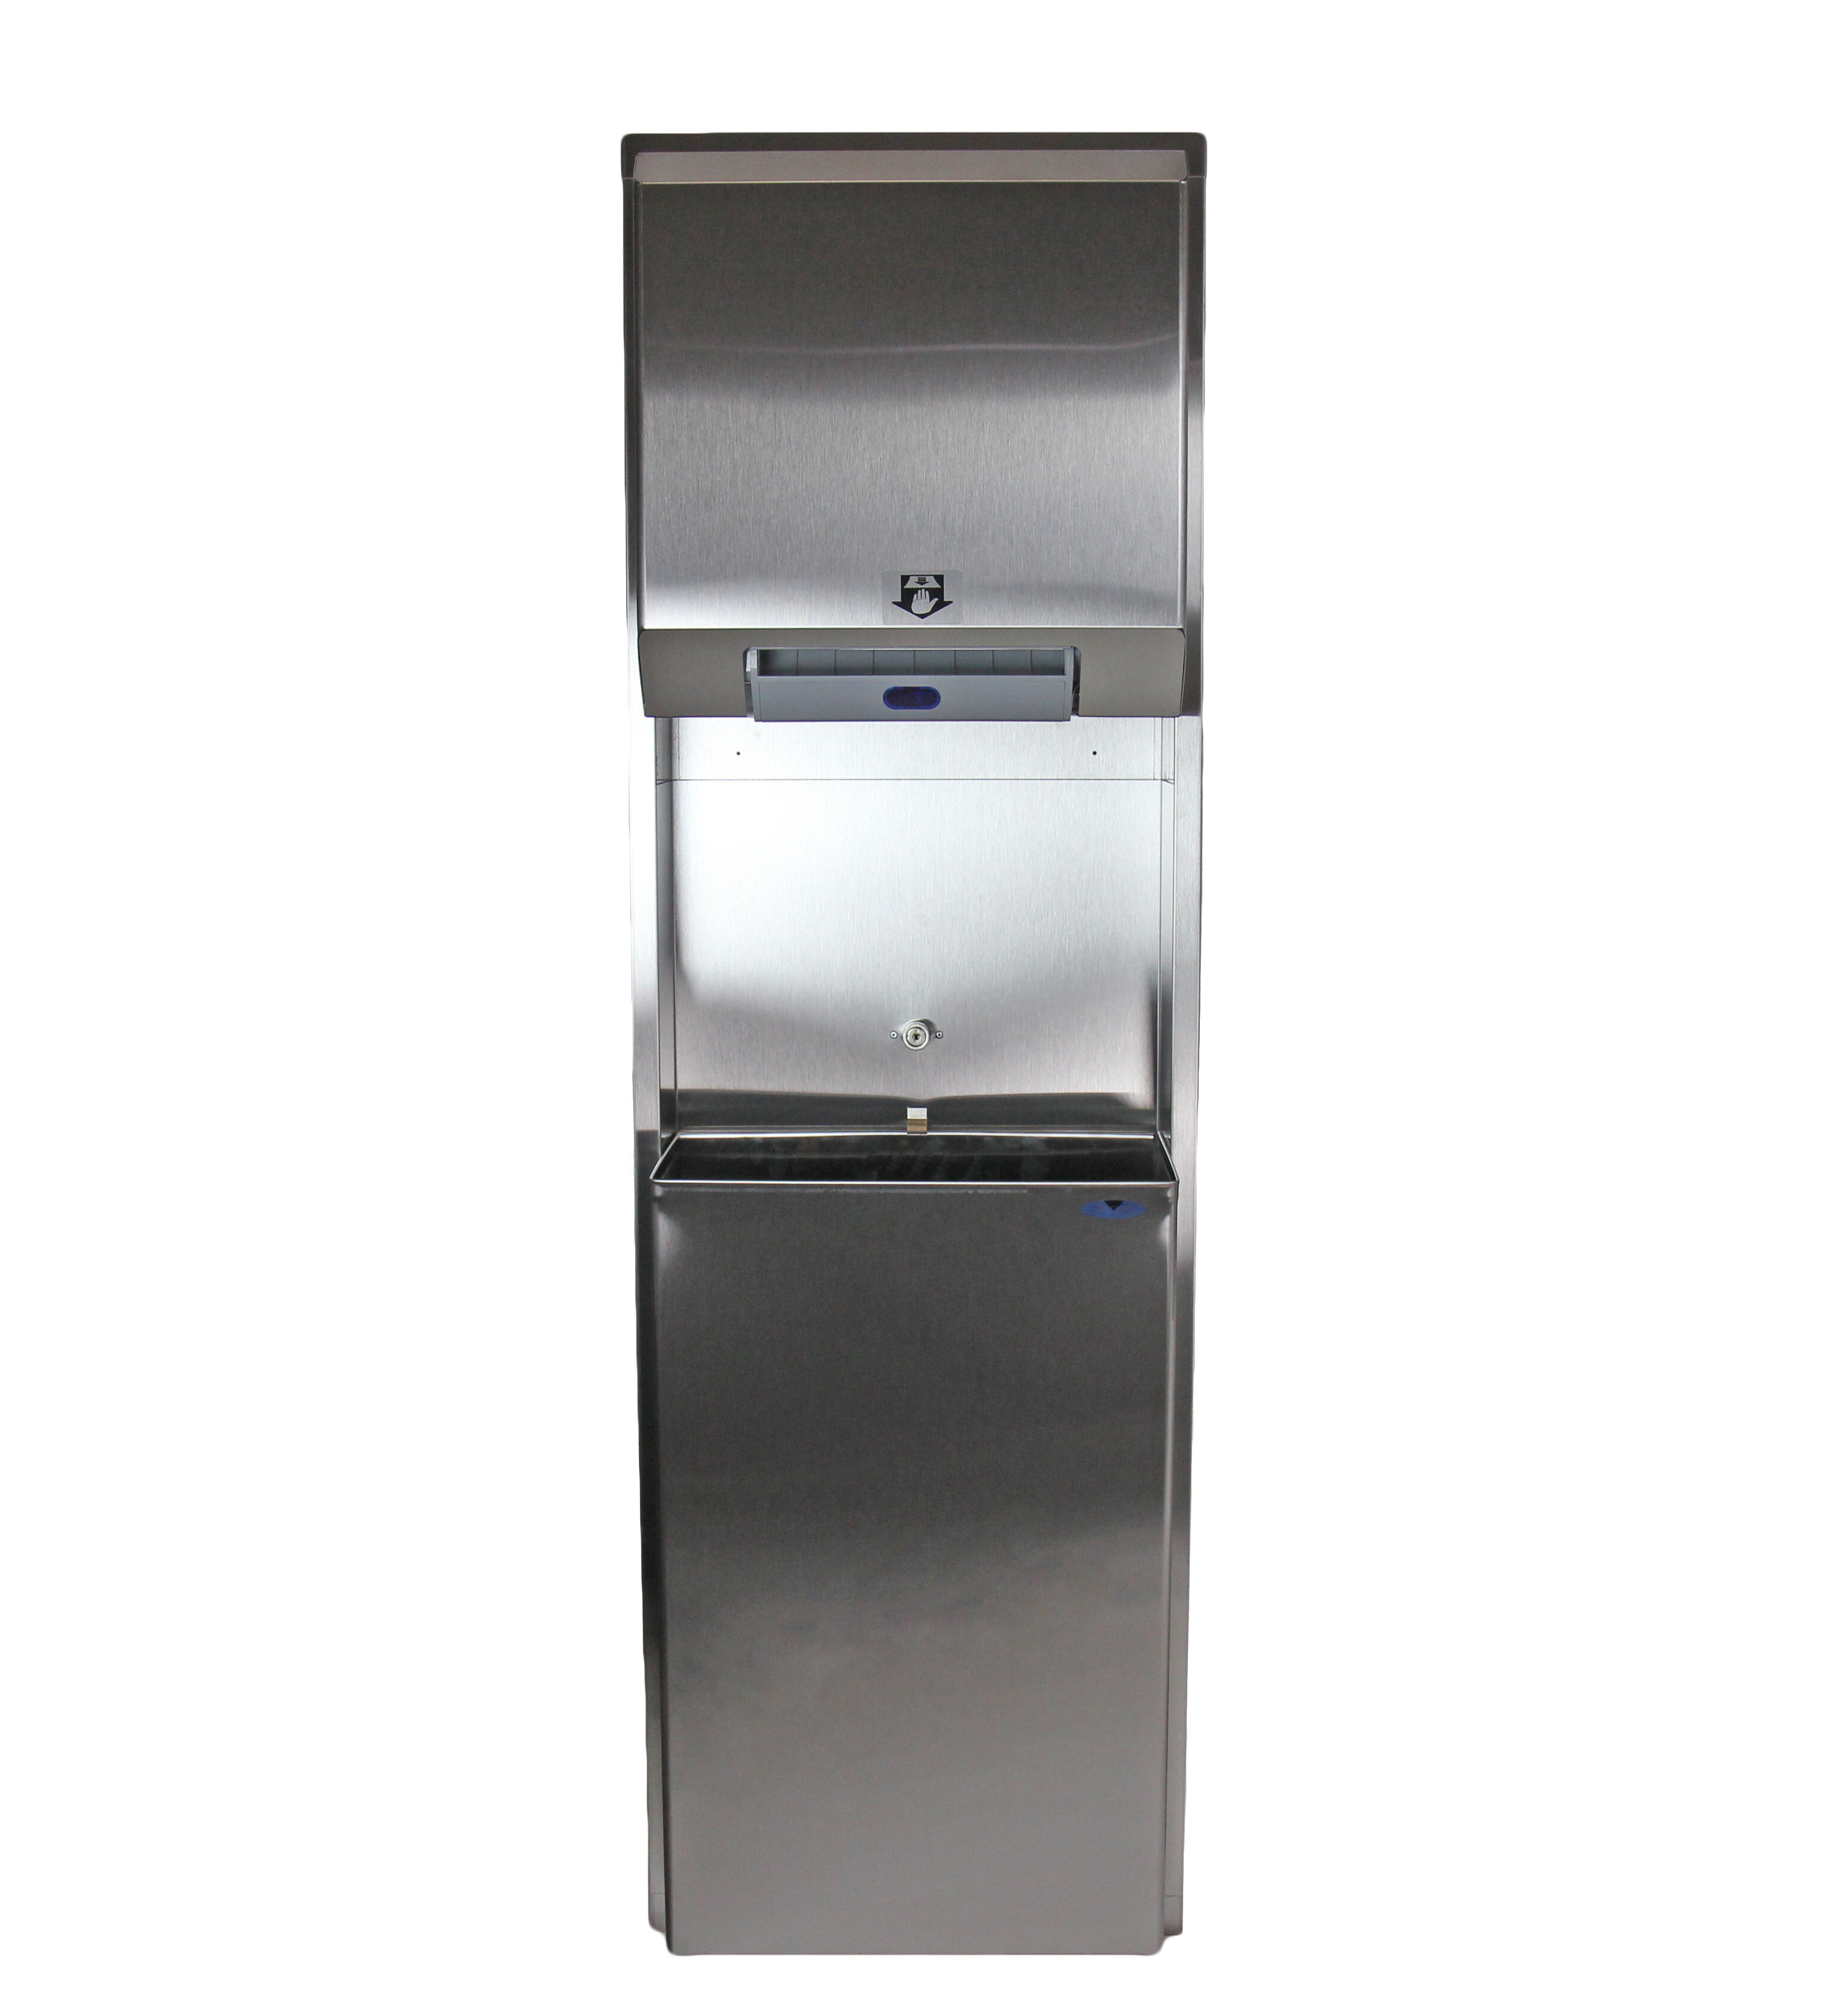 Frost Recessed Automatic Paper Towel Dispenser | Wayfair